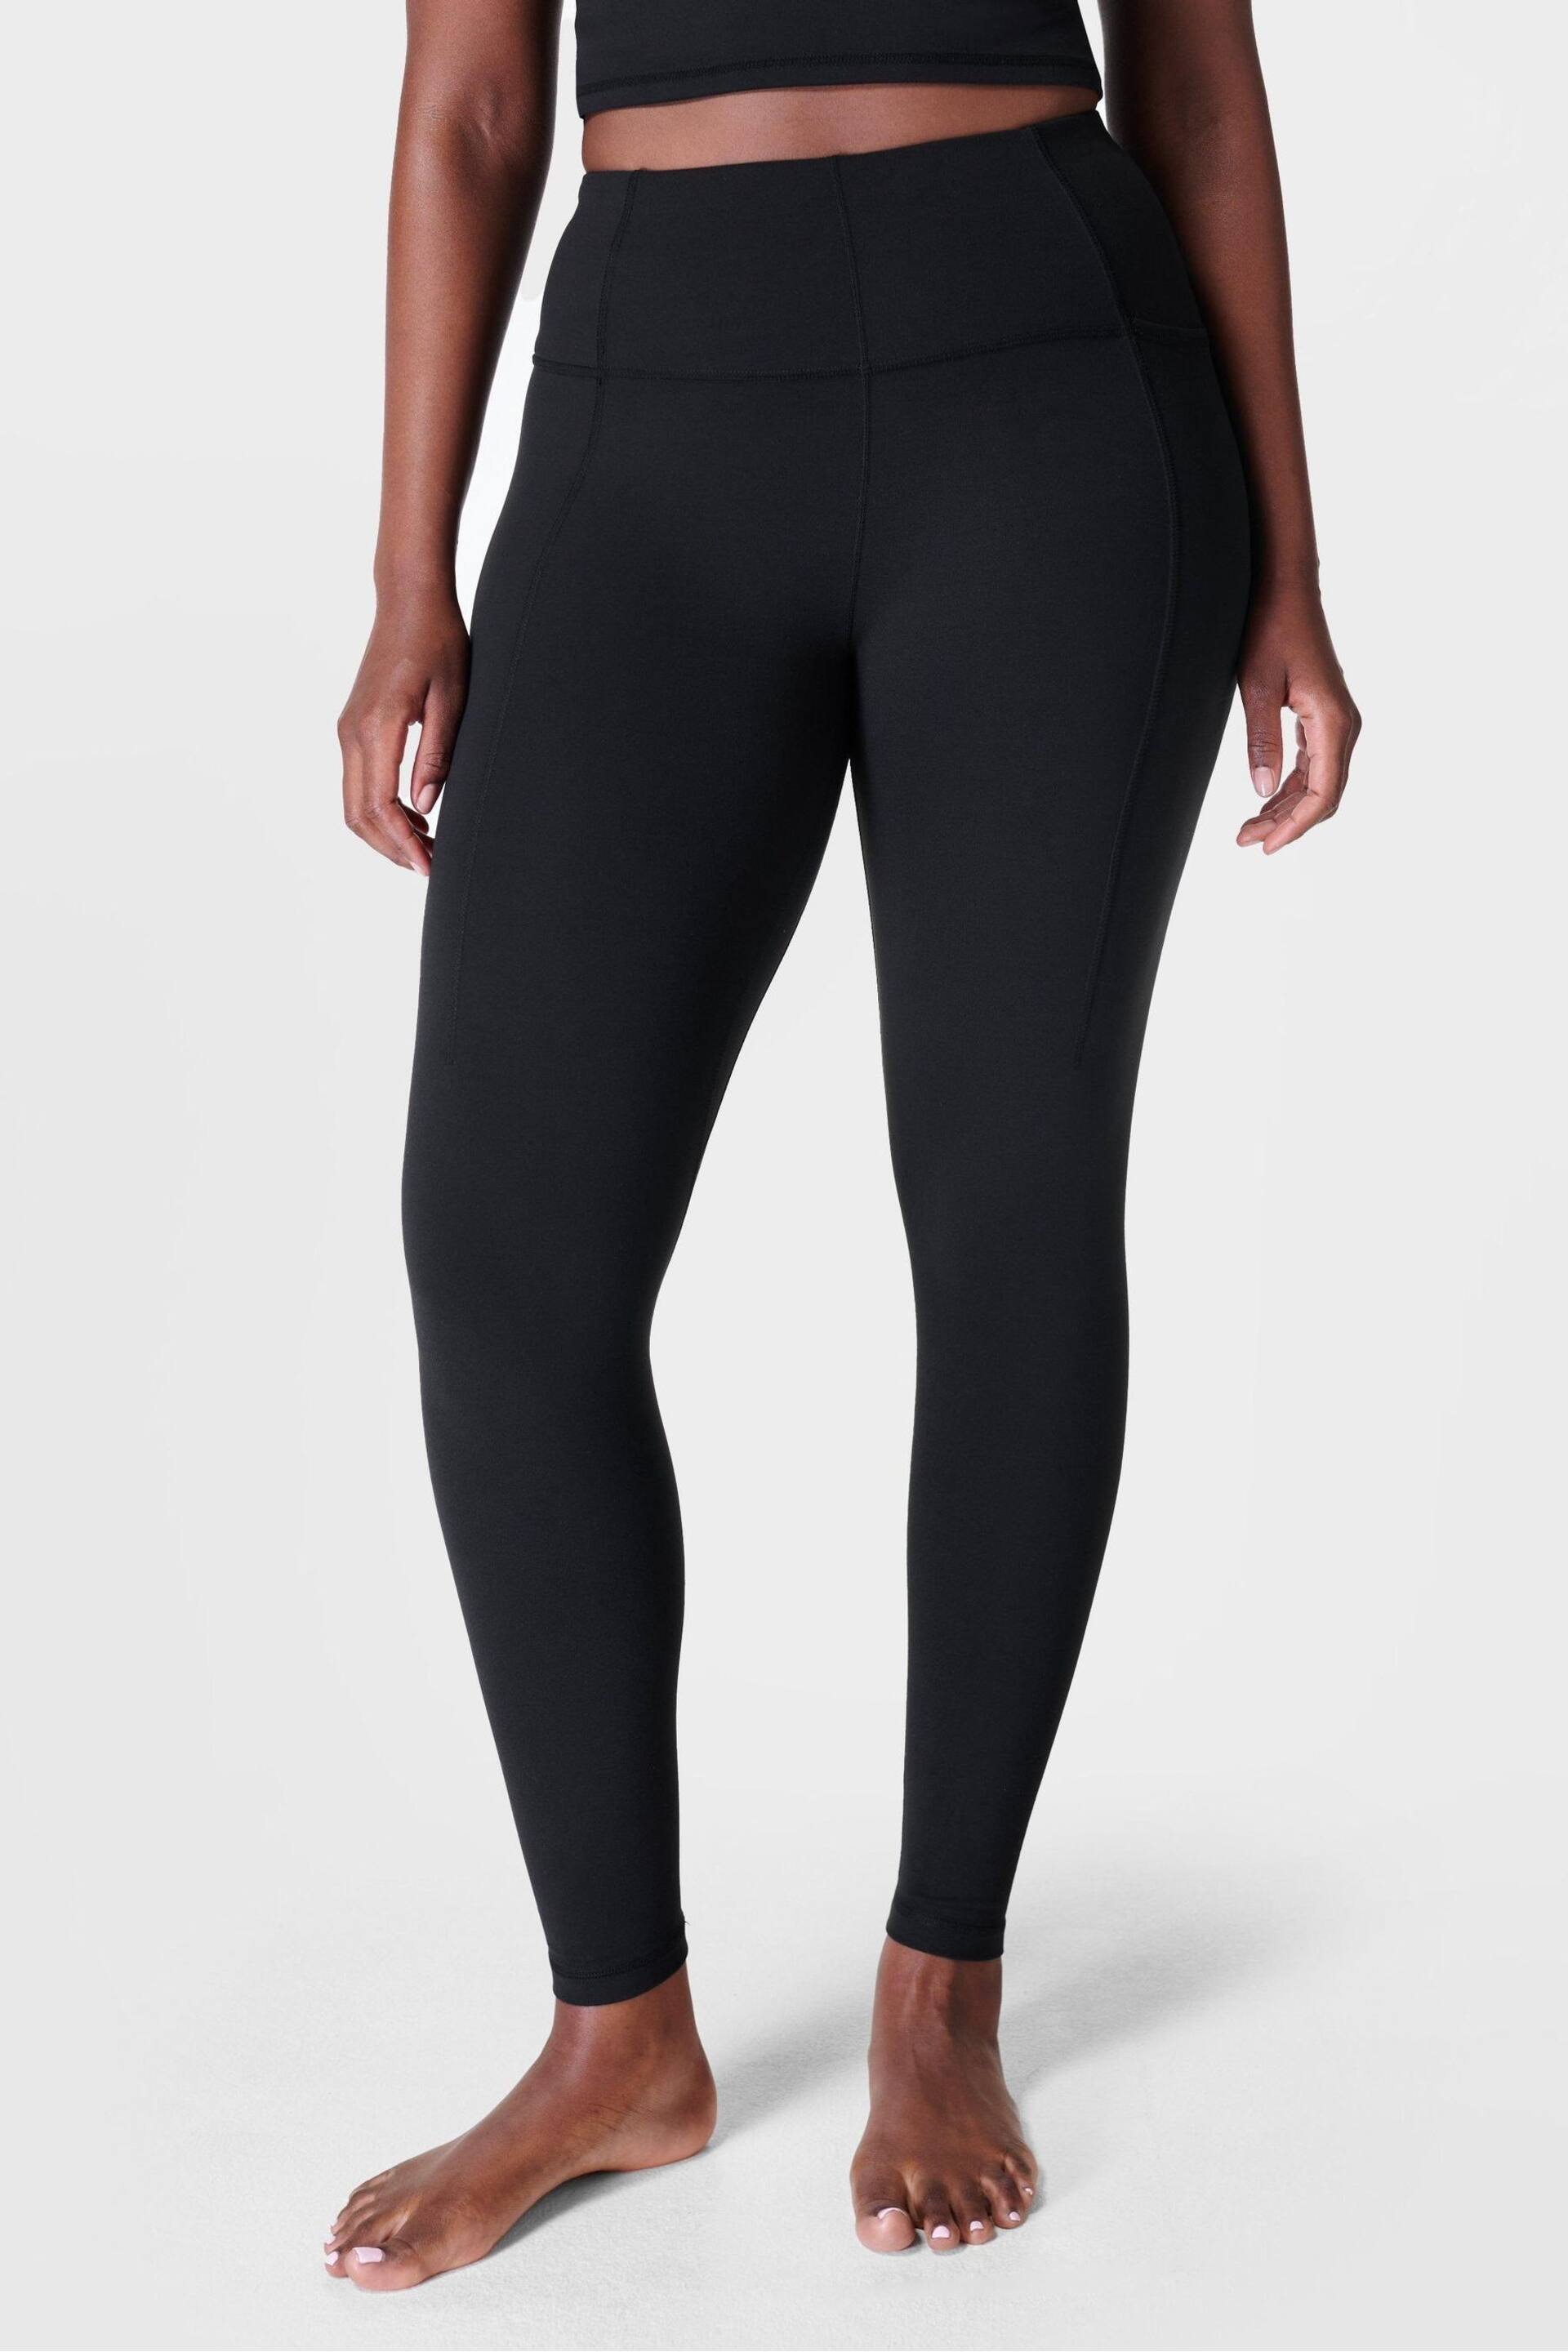 Sweaty Betty Black Full Length Super Soft Yoga Leggings - Image 1 of 8